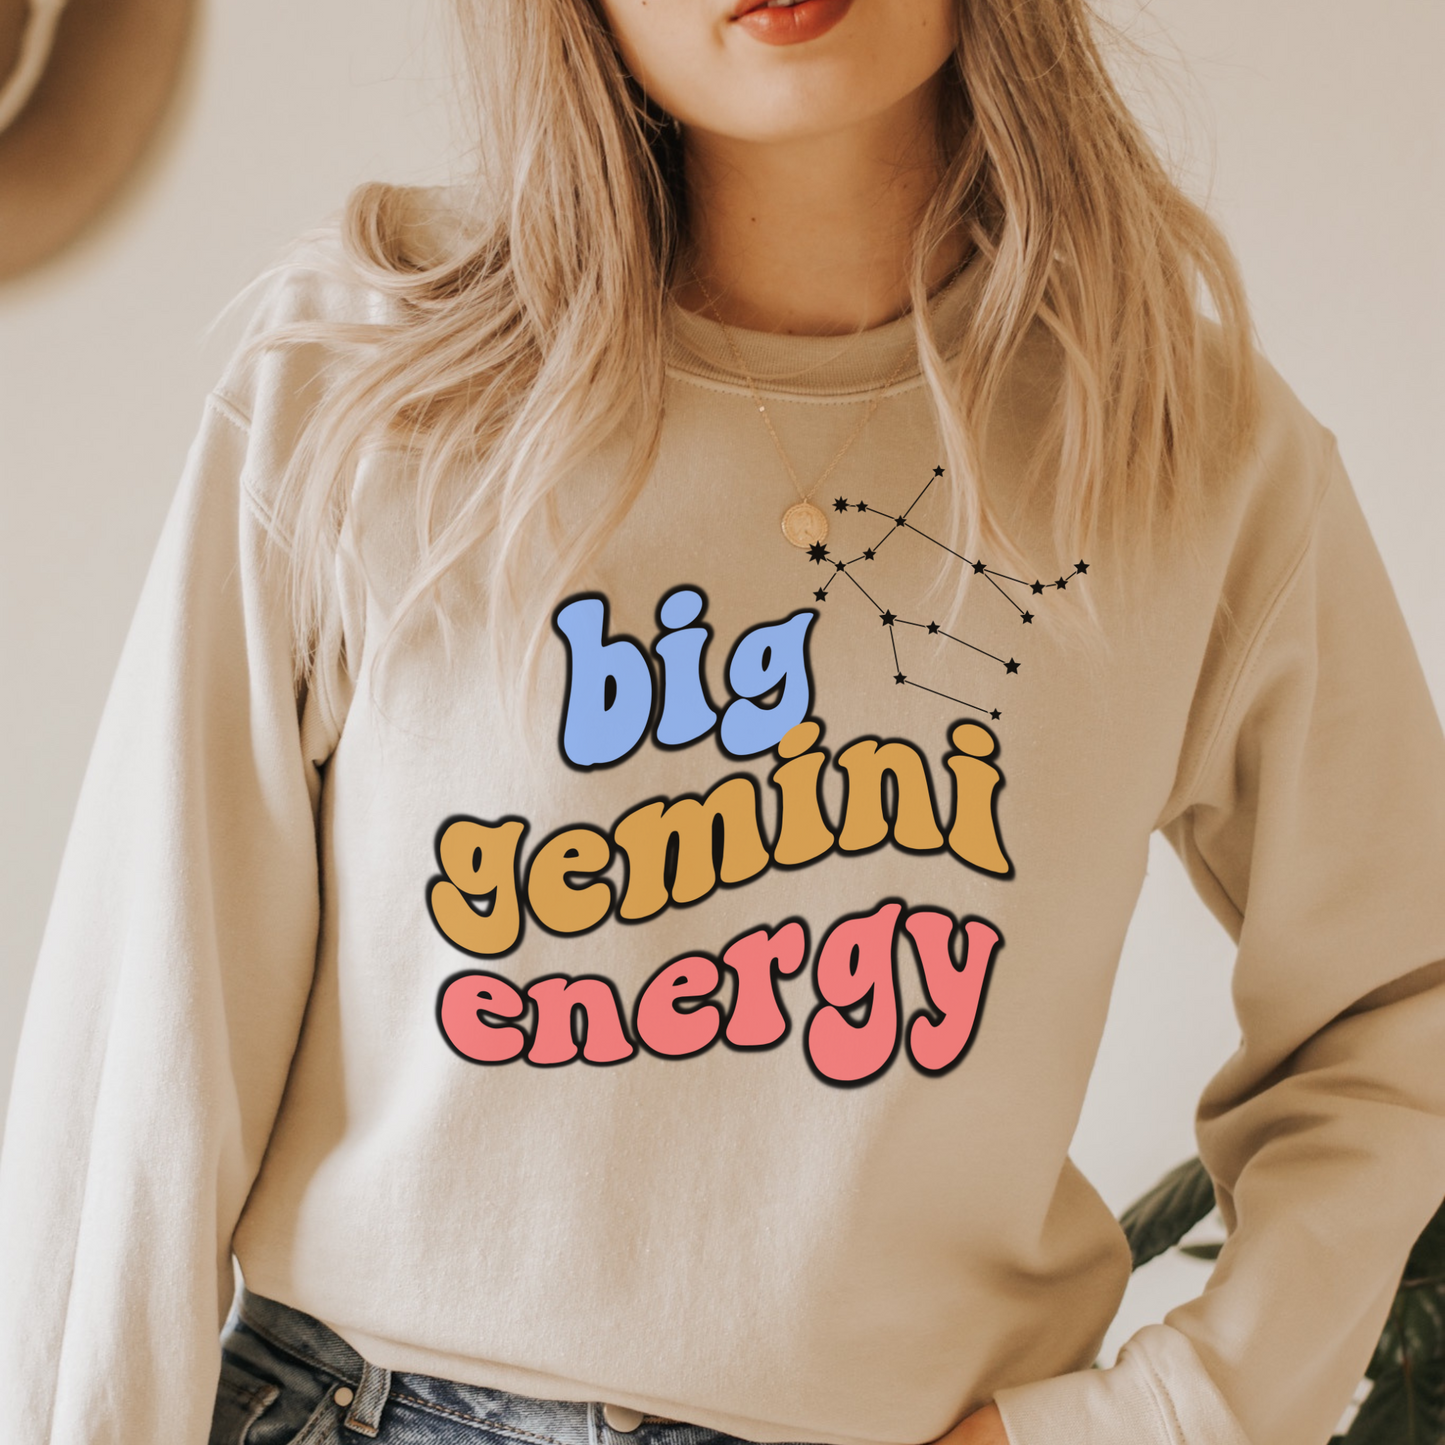 Gemini Sweatshirt, Big Gemini Energy Sweatshirt, Gift for Gemini, Astrology lover sweatshirt, Gift for Astrology Lover